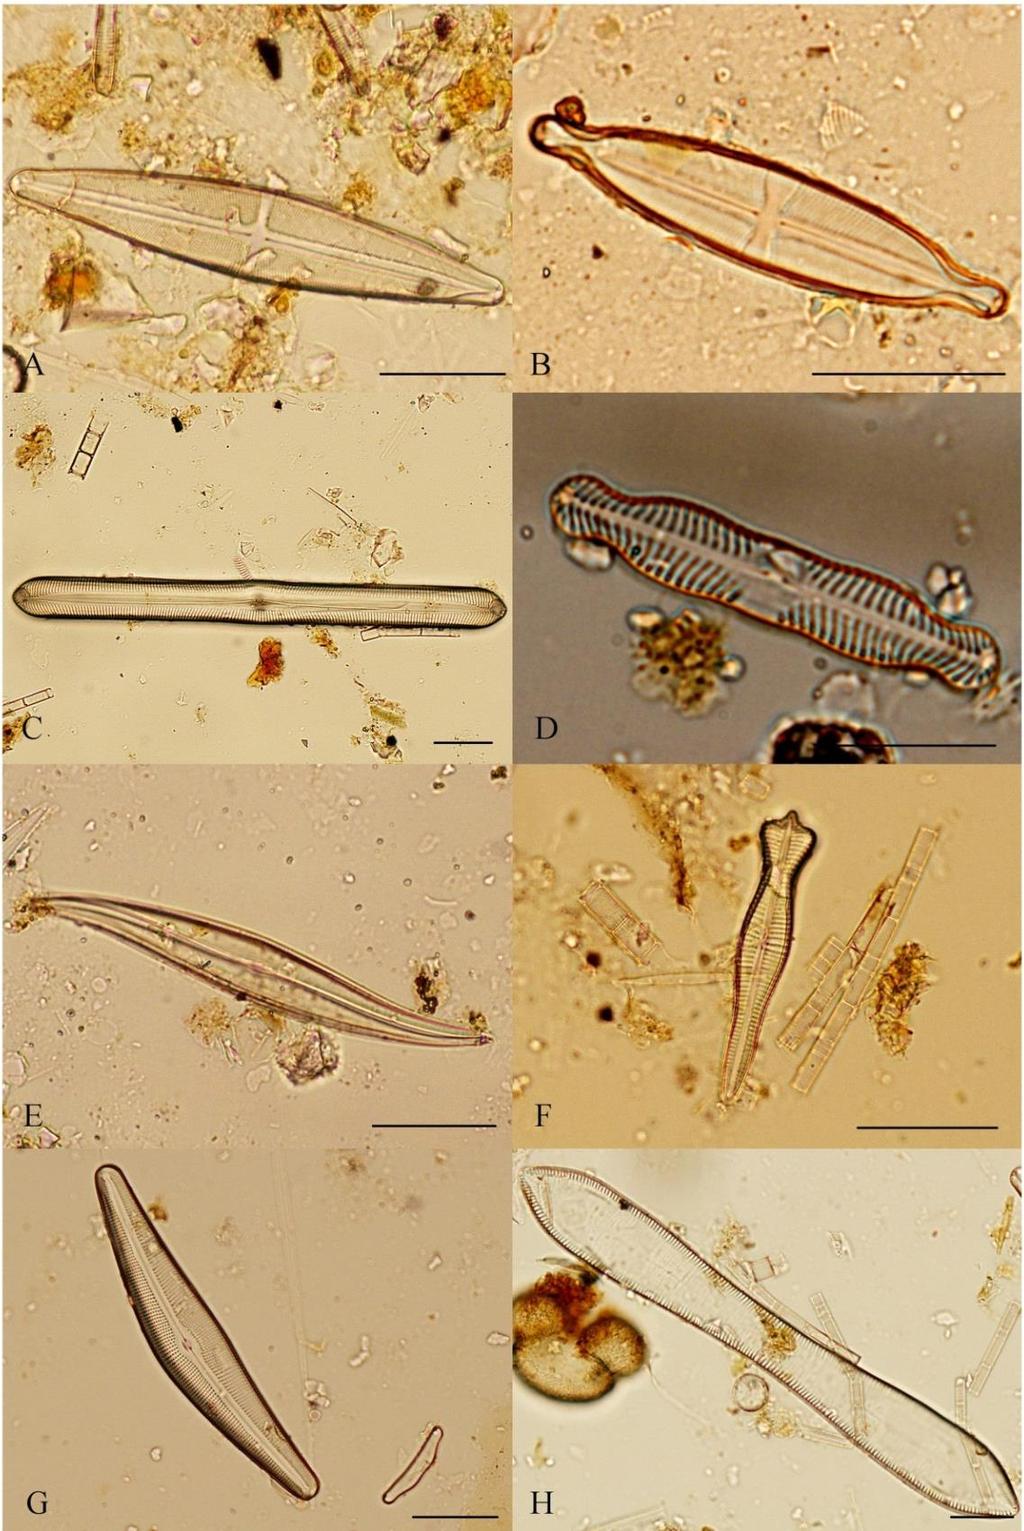 Příloha 9: Fotogalerie vybraných druhů Bacillariophyceae (A Stauroneis phoenicenteron (NITZSCH) EHRENBERG, B Stauroneis anceps EHRENBERG, C Pinnularia transversa (SCHMIDT), MAYER, D Pinnularia